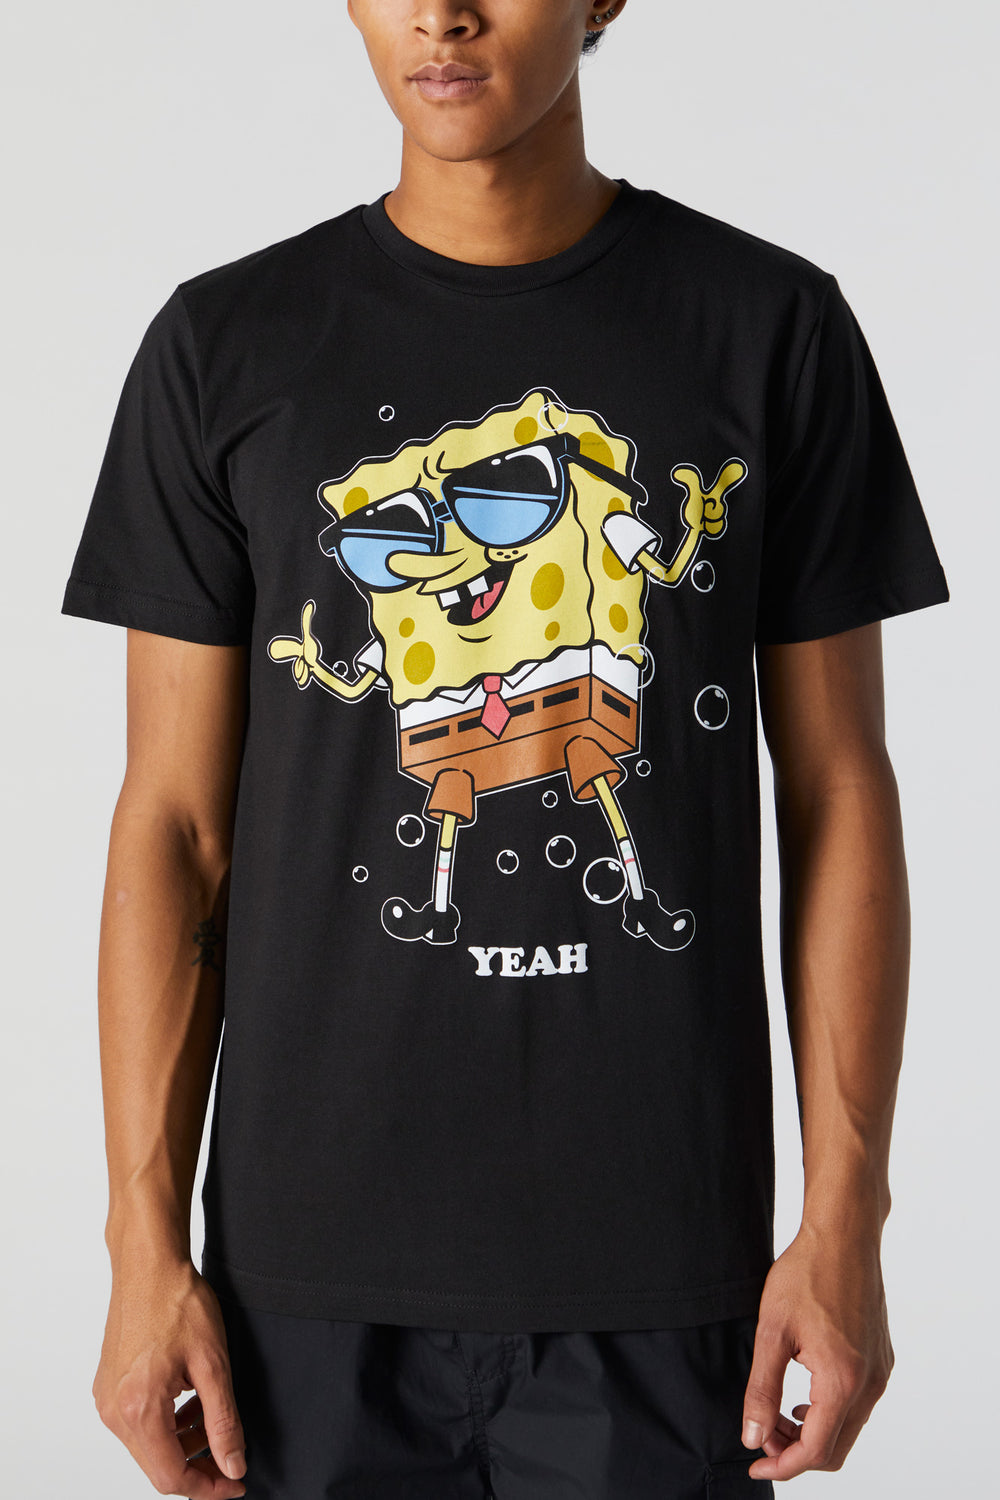 Yeah SpongeBob Graphic T-Shirt Yeah SpongeBob Graphic T-Shirt 4